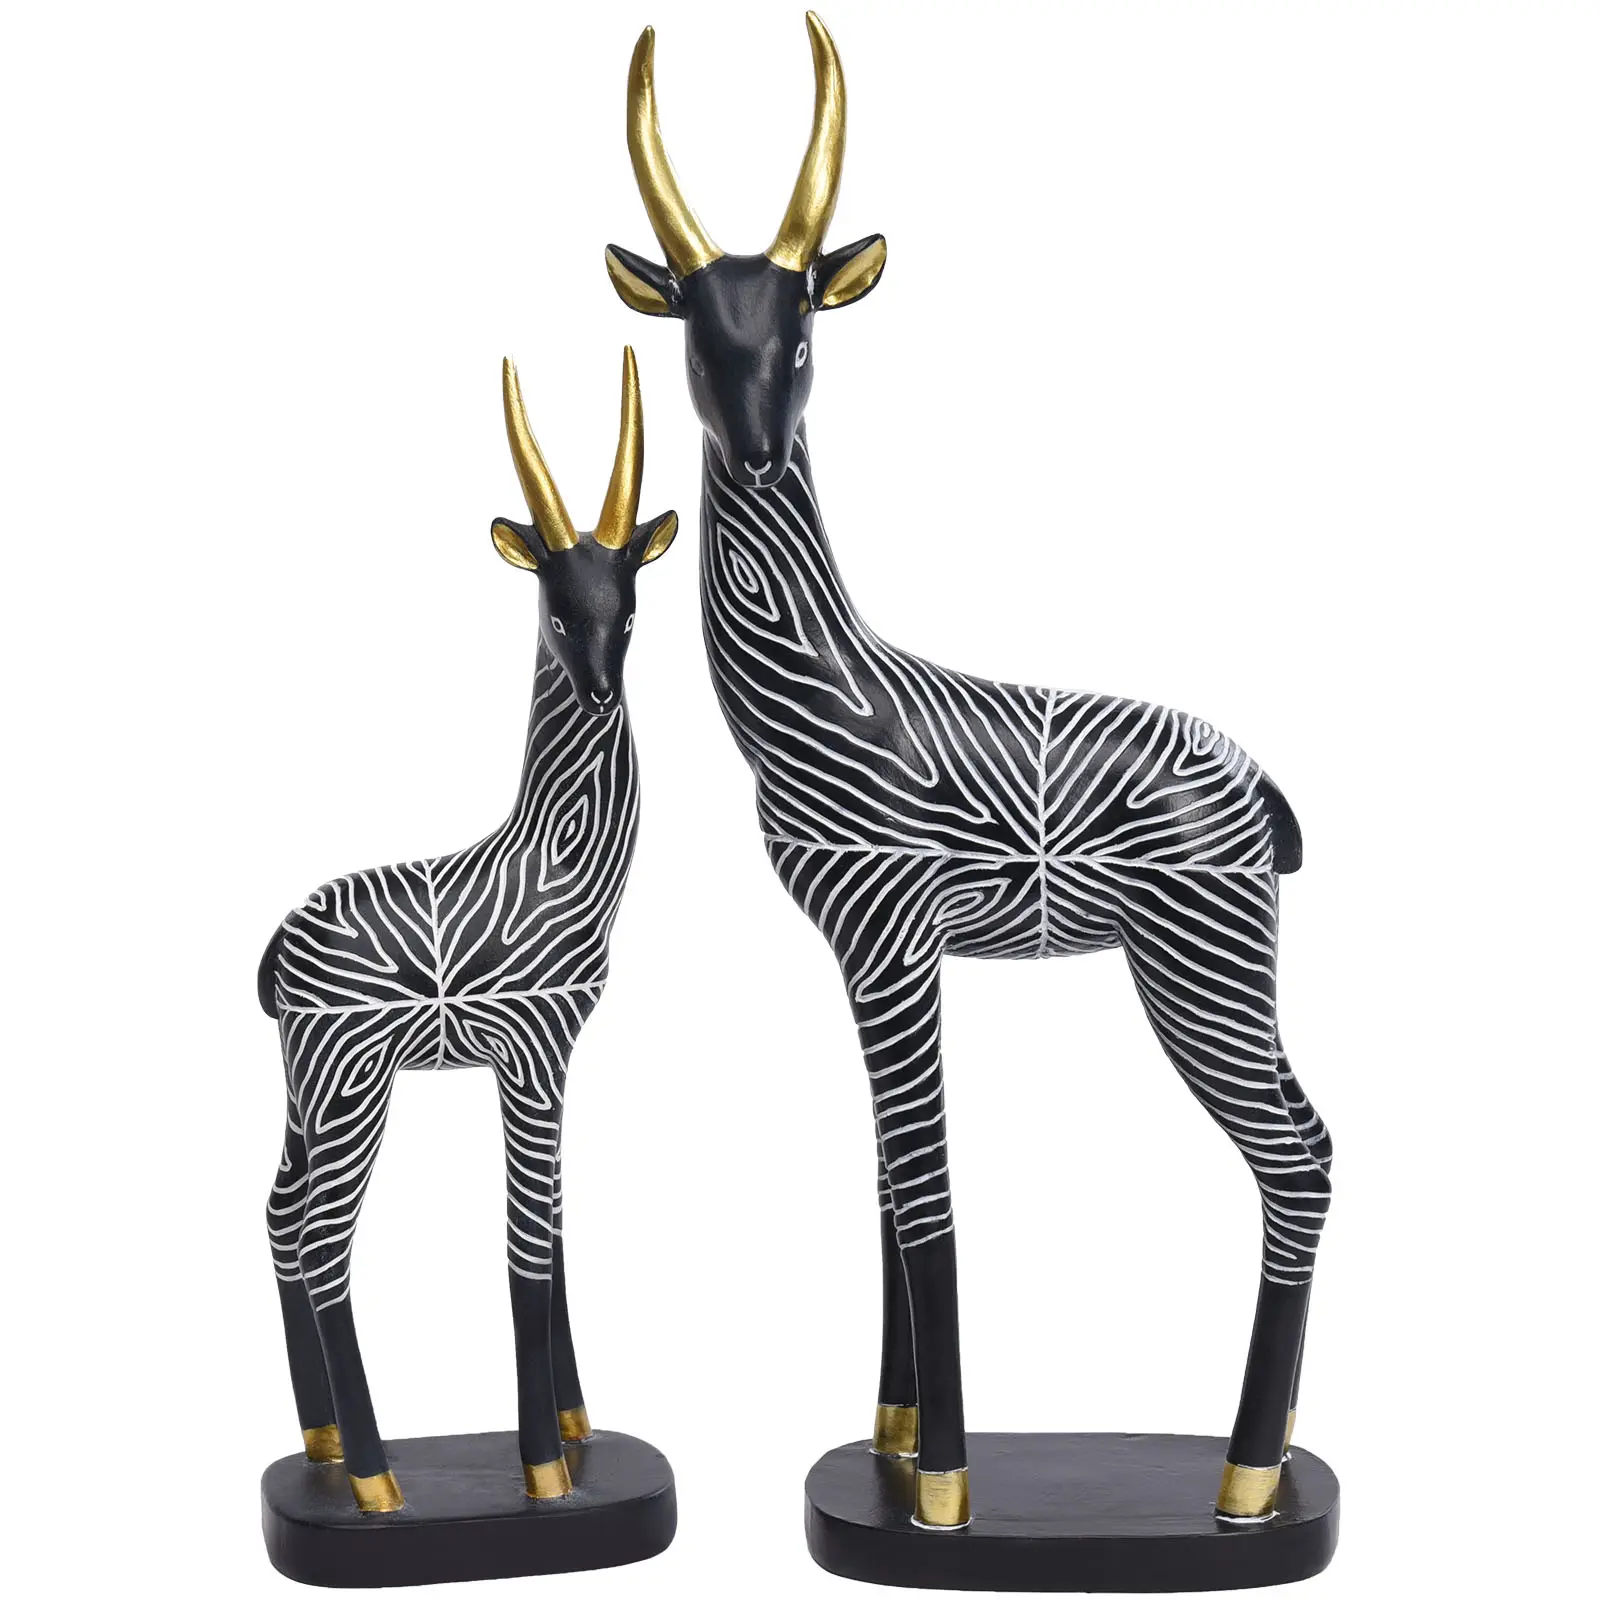 Indische Impala Dekoration afrikanischen Stil Home Resin Antilope Tier figur Dekor Dekor Skulptur Tabelle